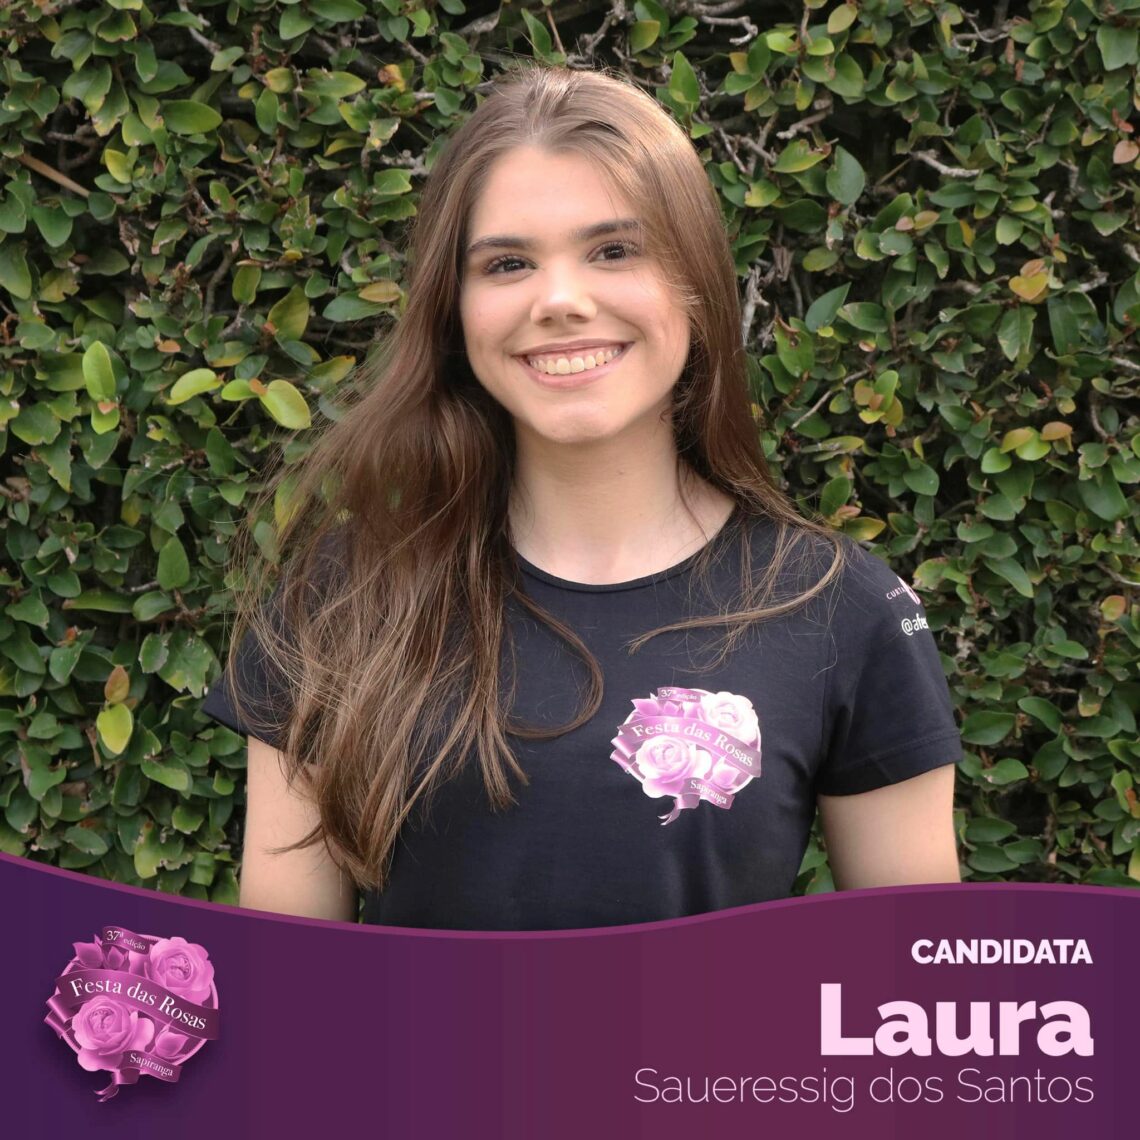 Laura Fontana Spolaor 17 anos - Moradora do bairro Amaral Ribeiro